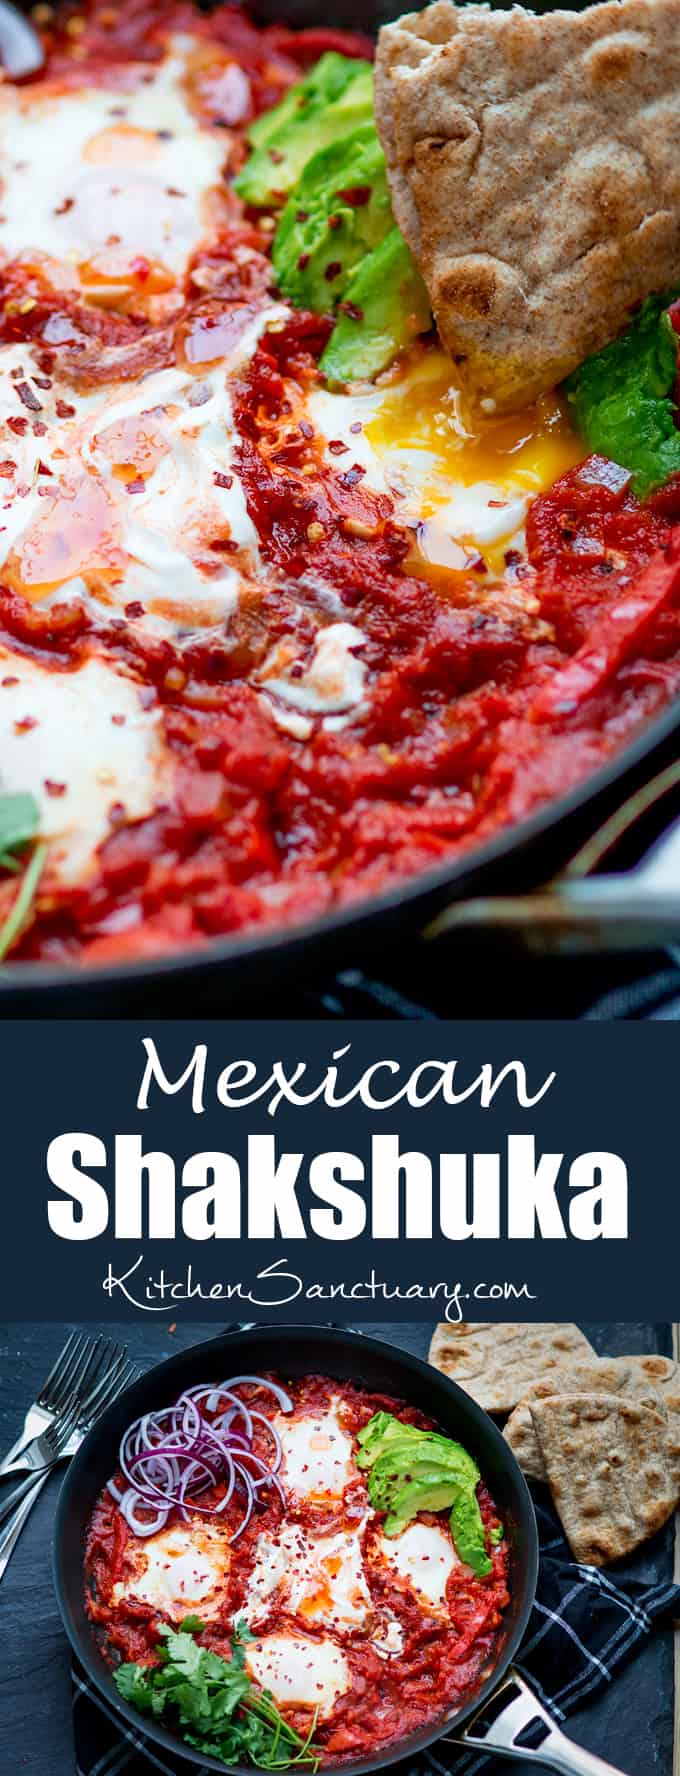 Mexican Shakshuka - Nicky's Kitchen Sanctuary